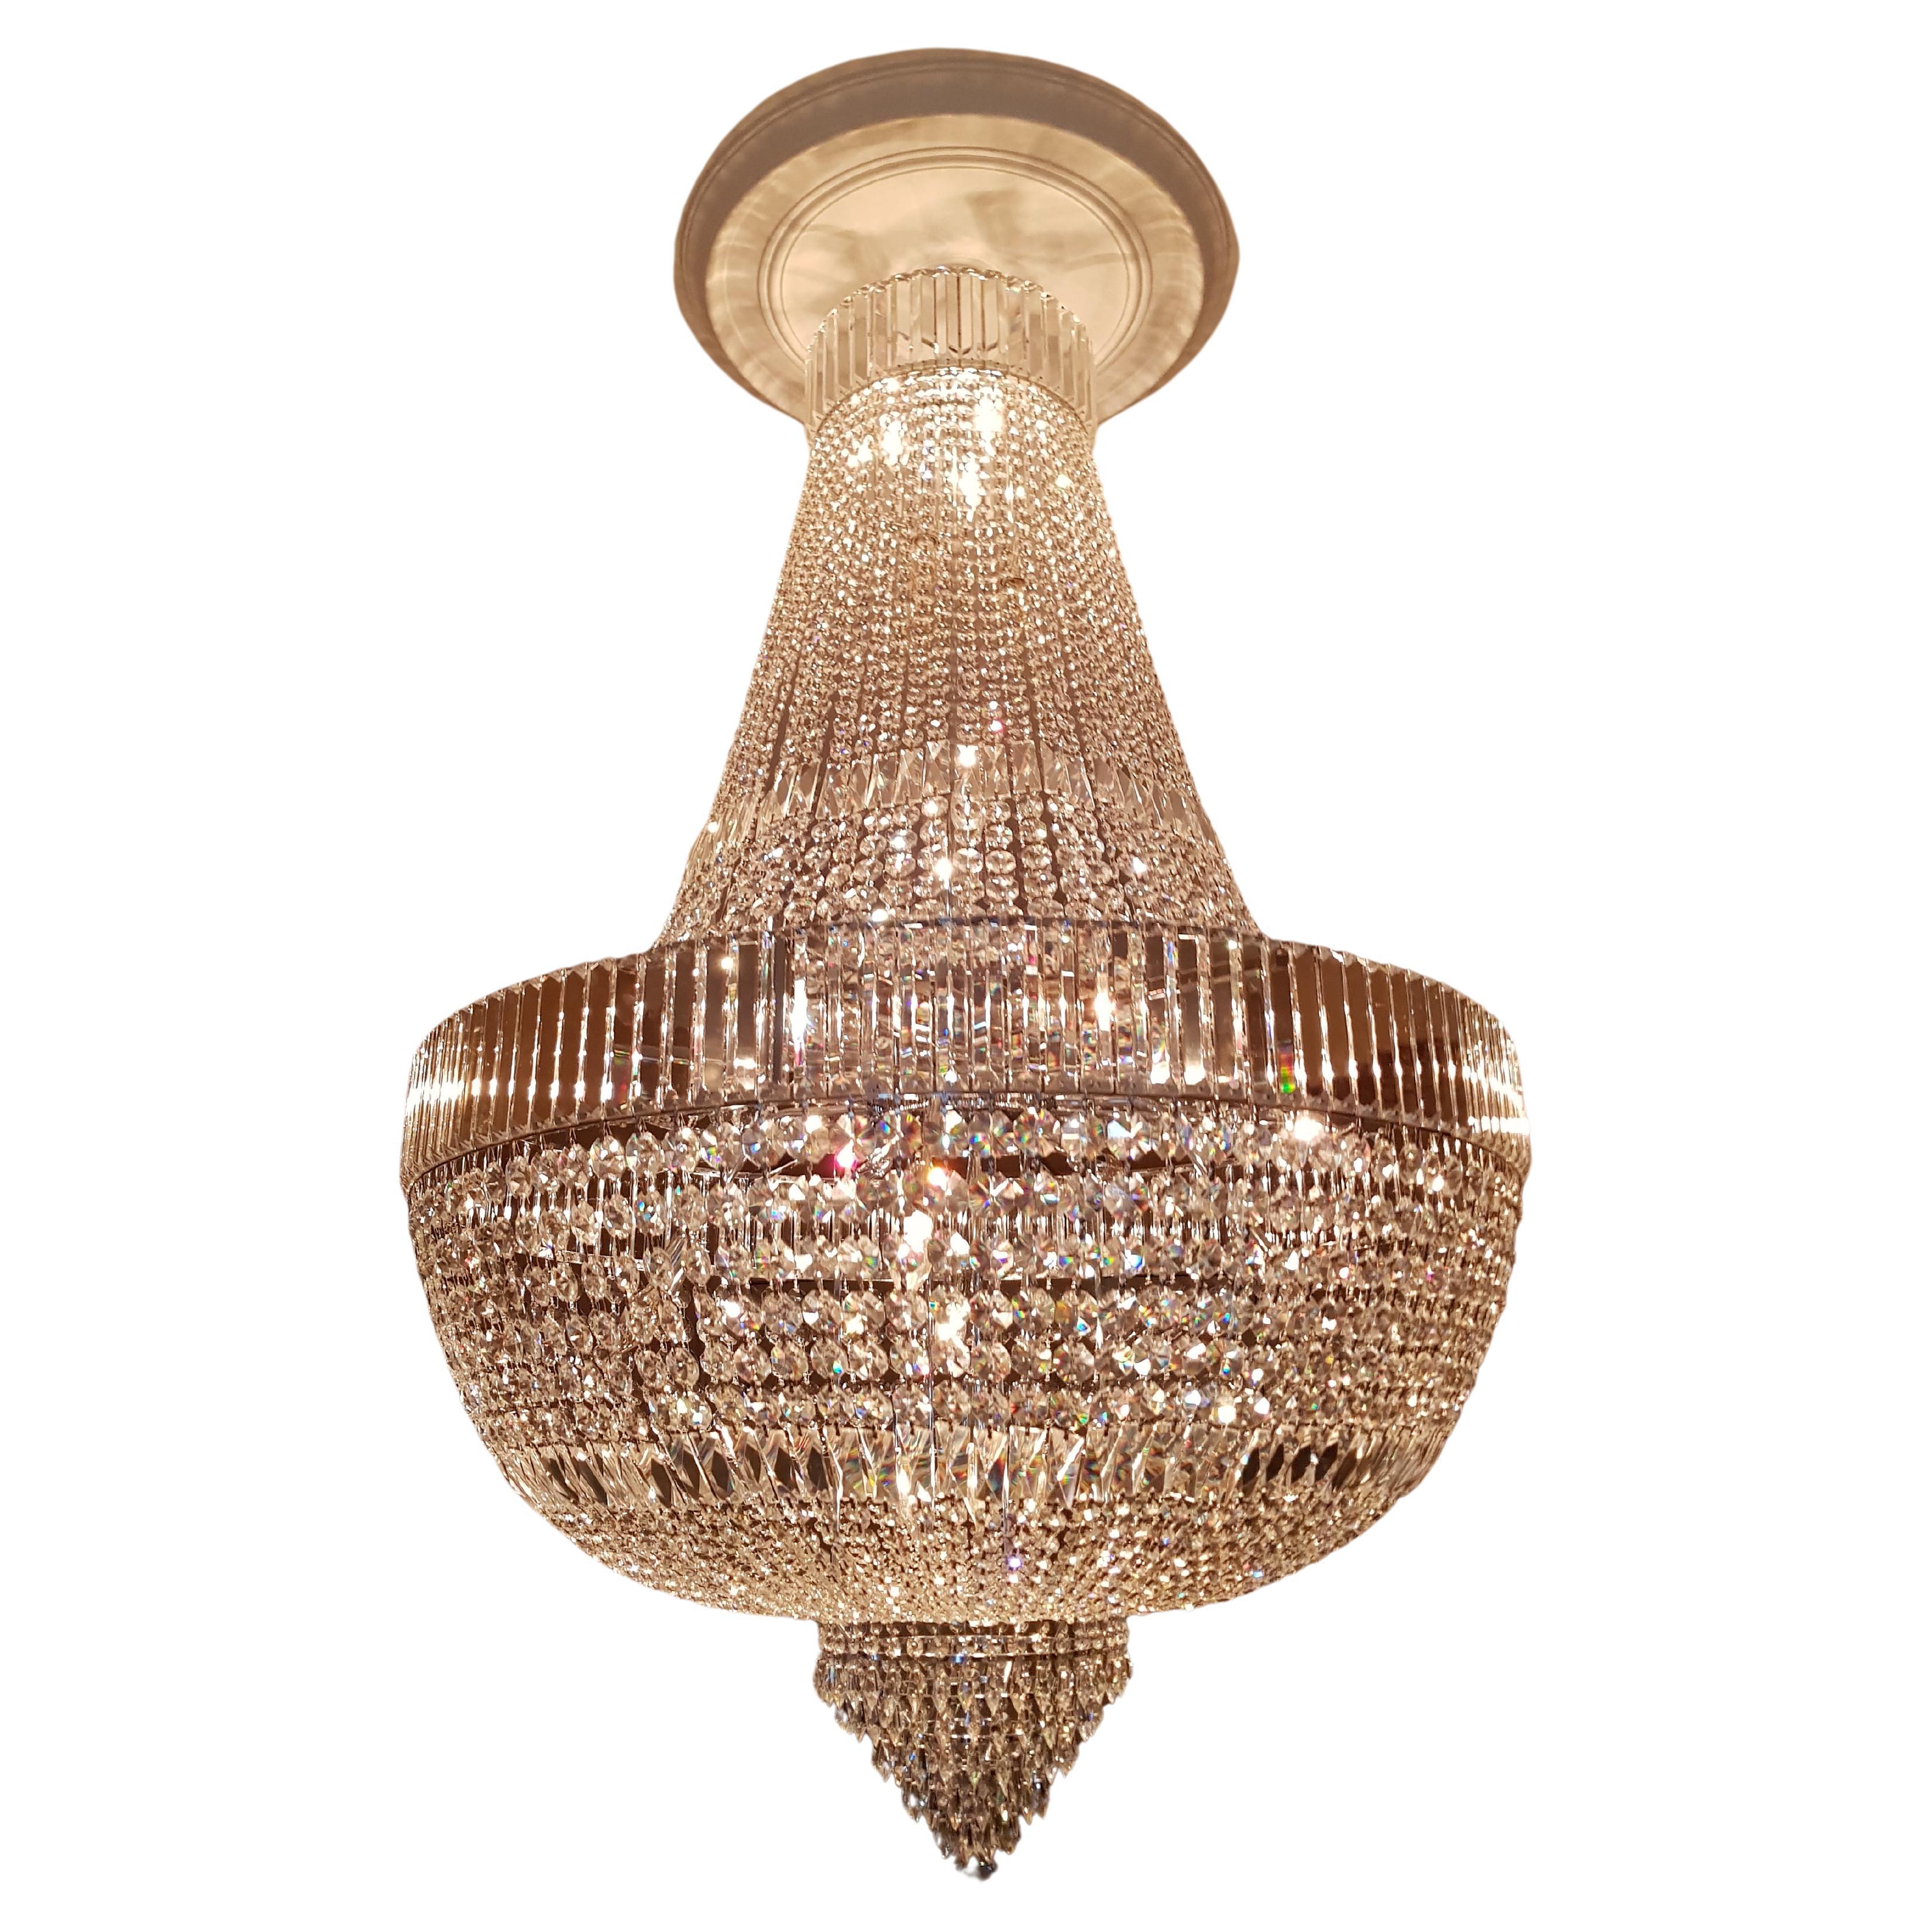 Art Deco Crystal Chandelier Empire Sac a Pearl Palace Lamp Chrome